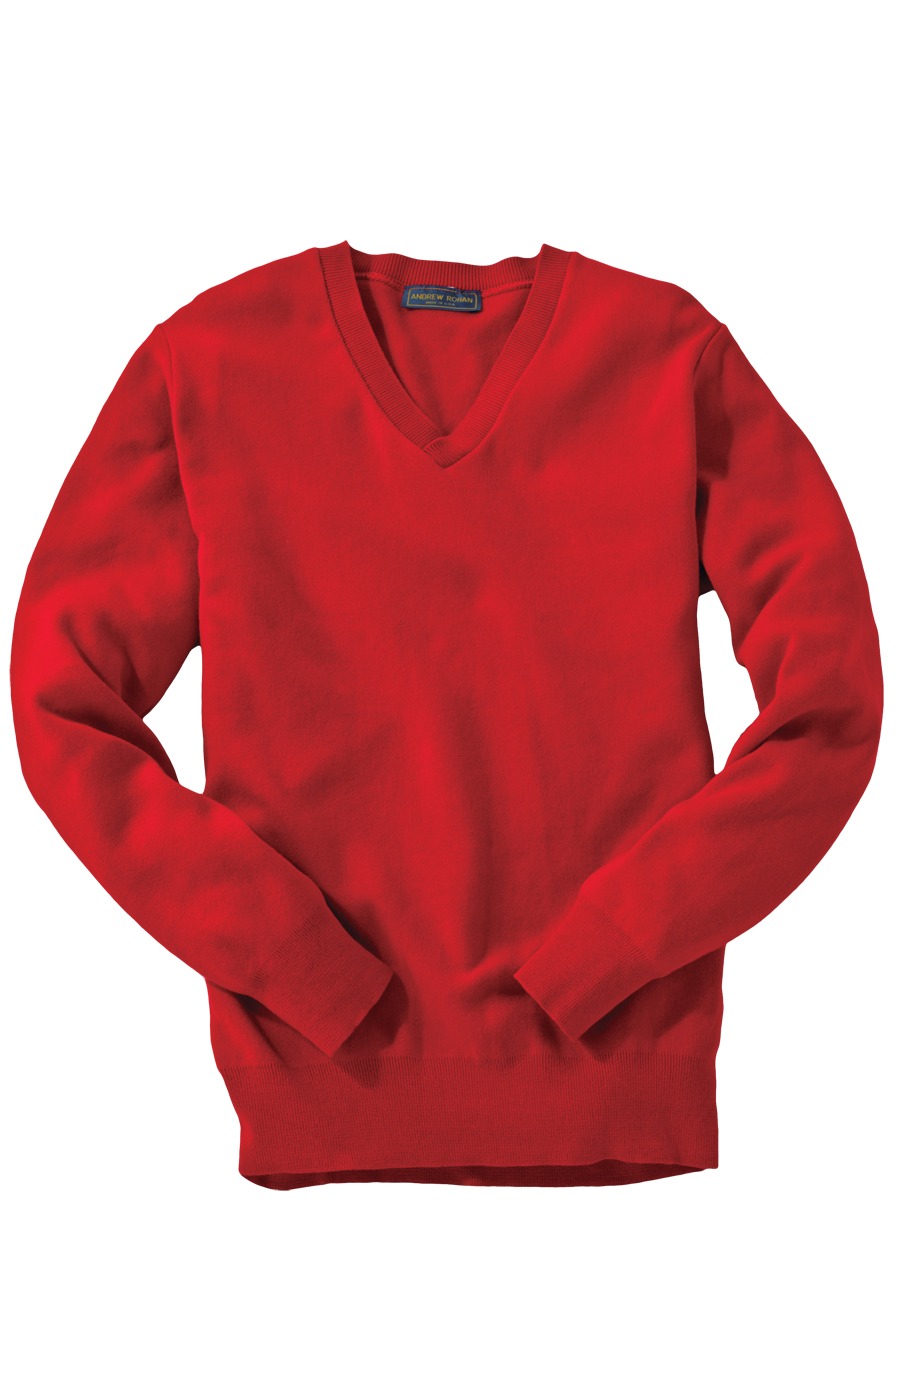 Edwards Garment 700 - Men's Cotton Cashmere V-Neck Sweater